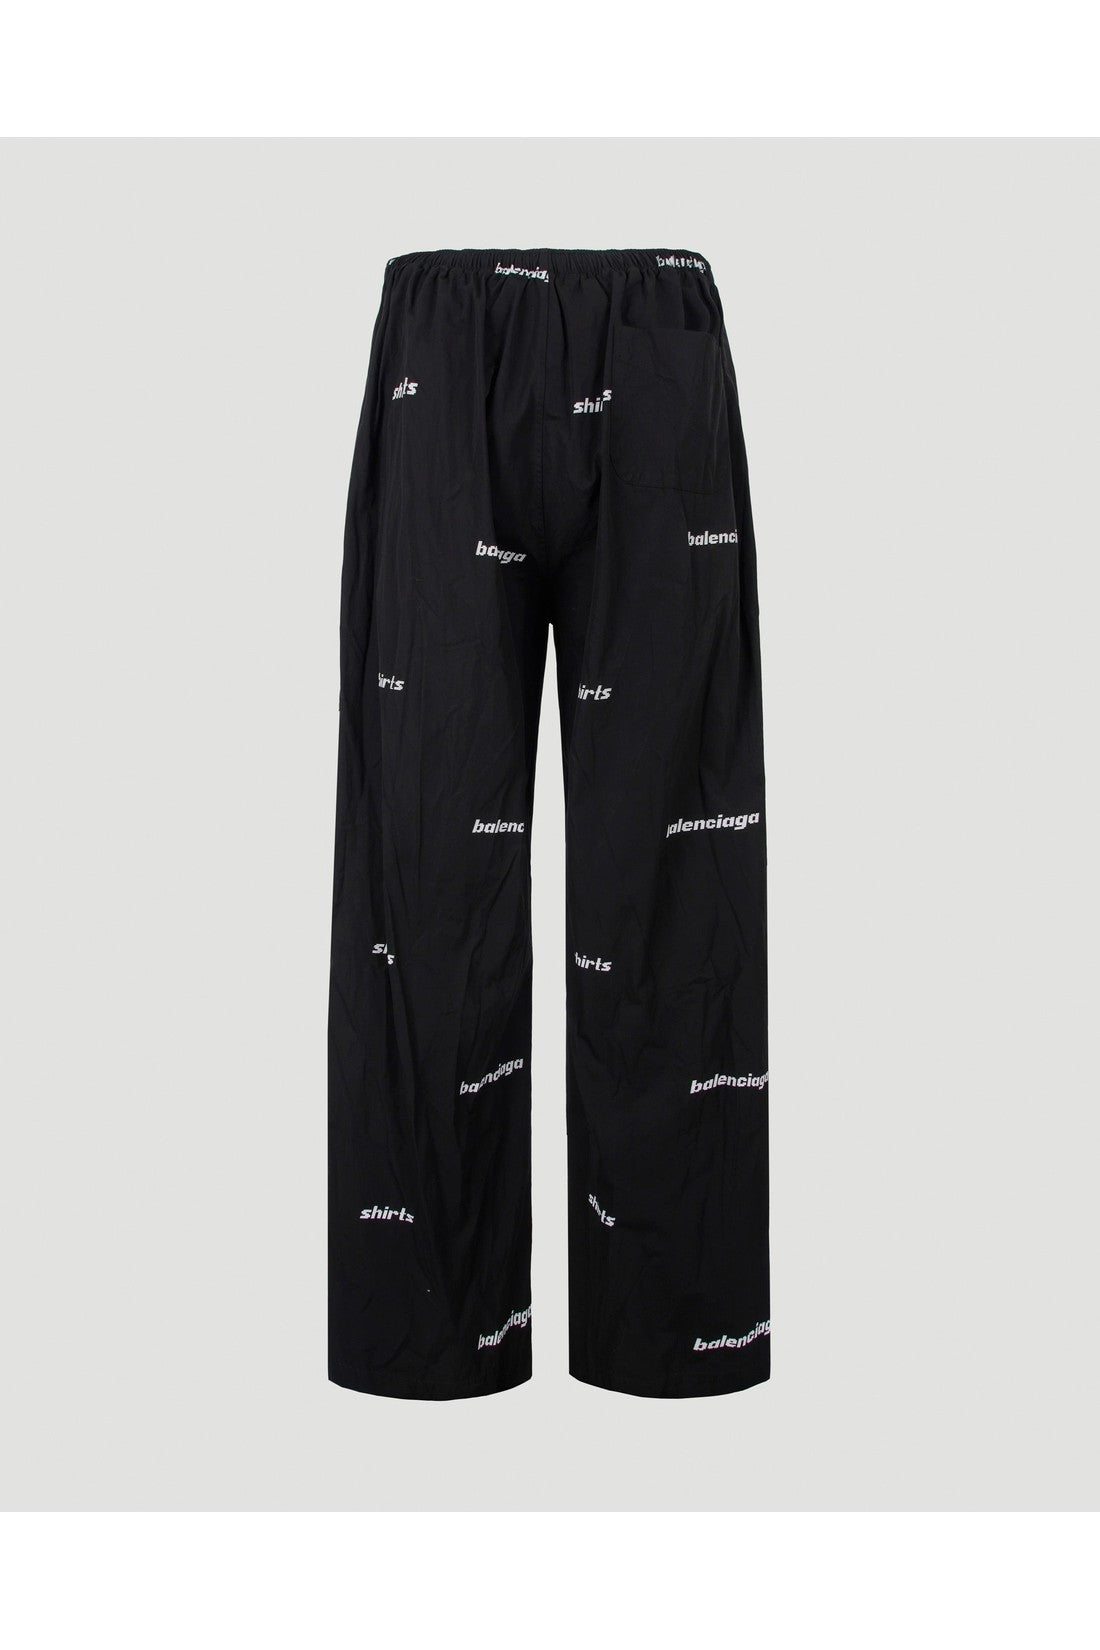 BALENCIAGA-OUTLET-SALE-Pyjama Pants-ARCHIVIST